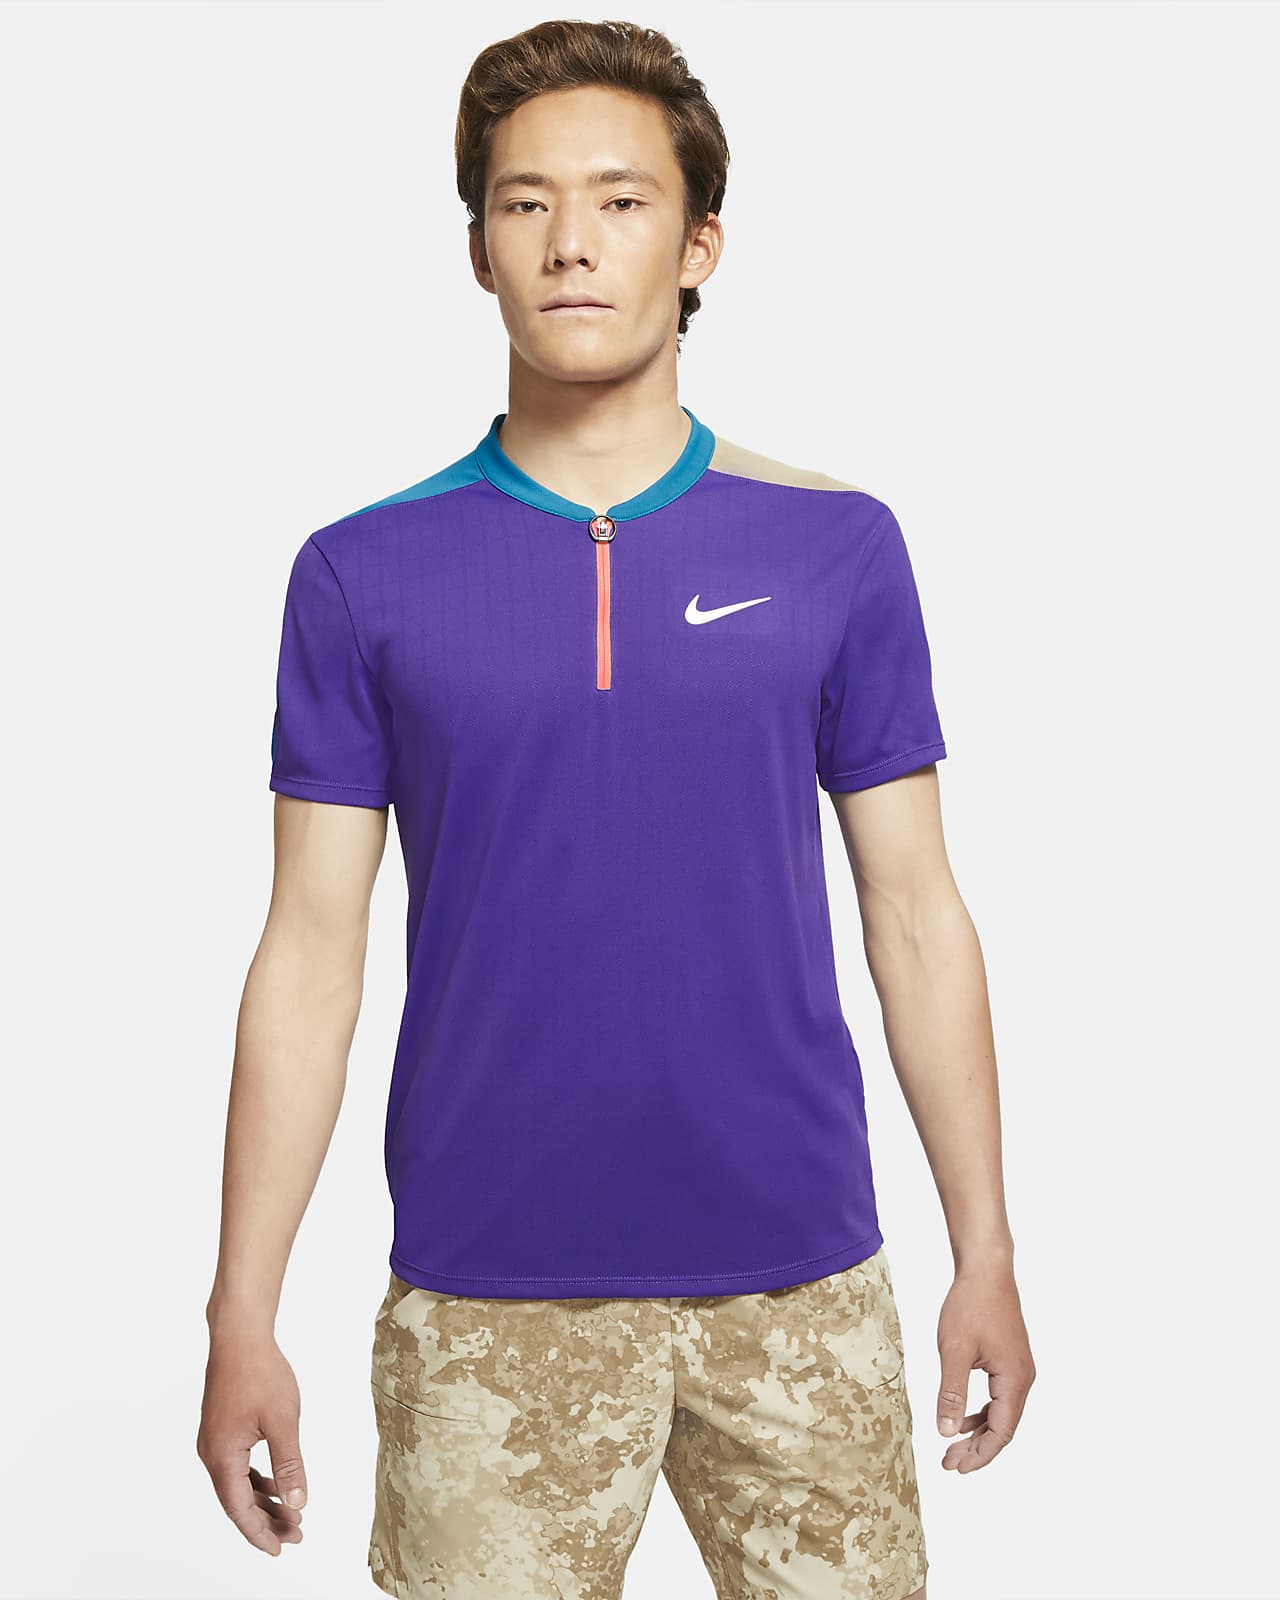 nike tennis purple